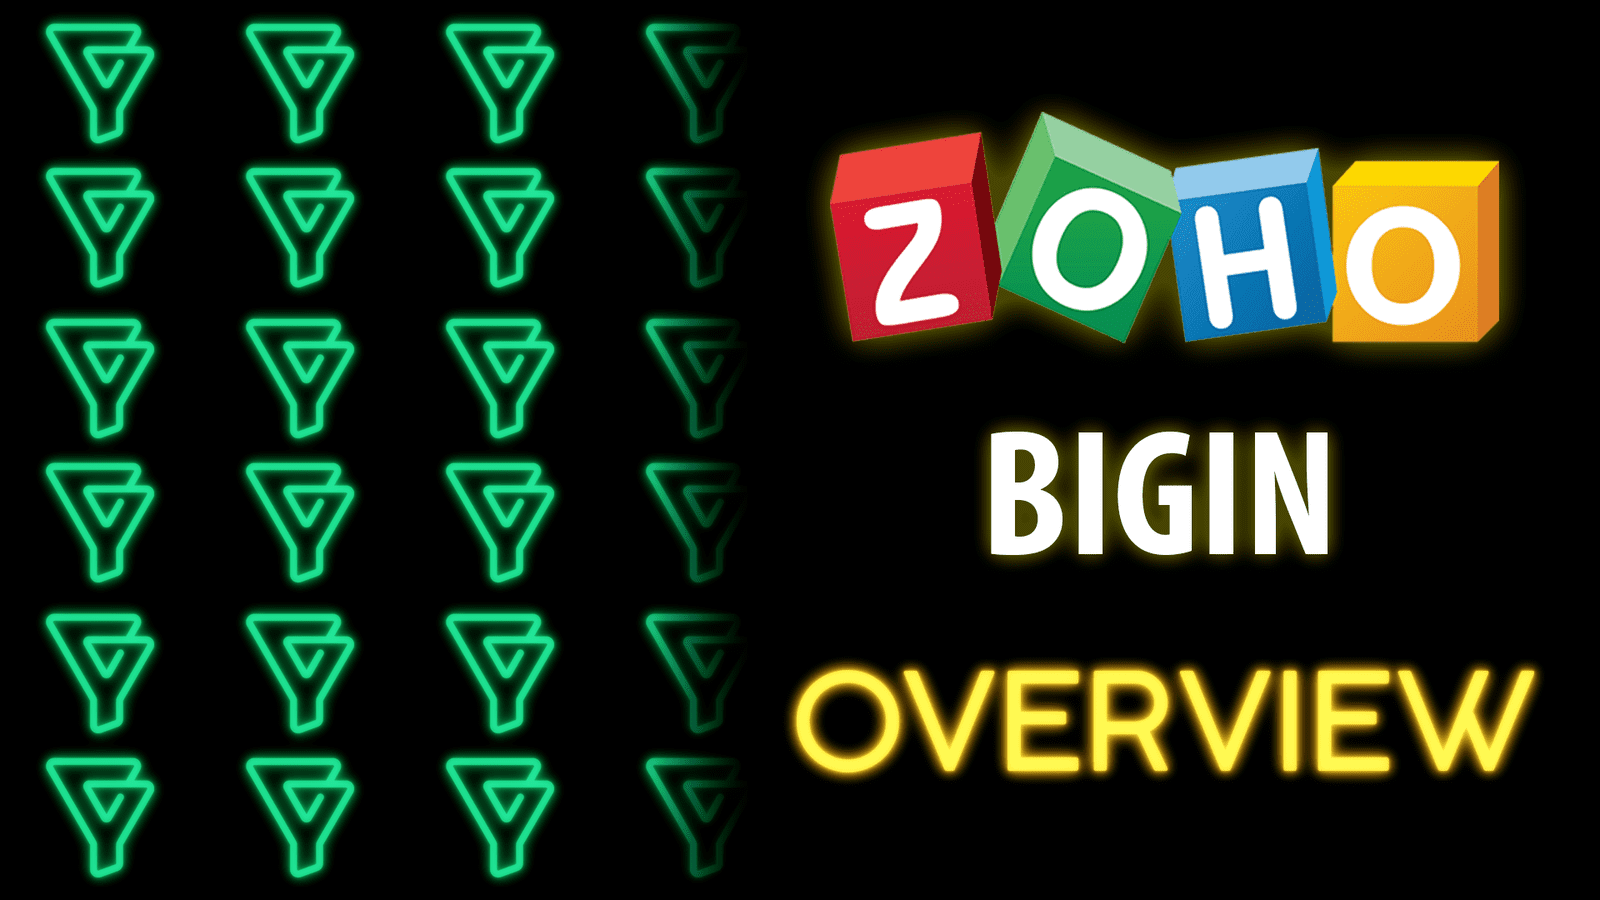 Zoho Bigin Overview